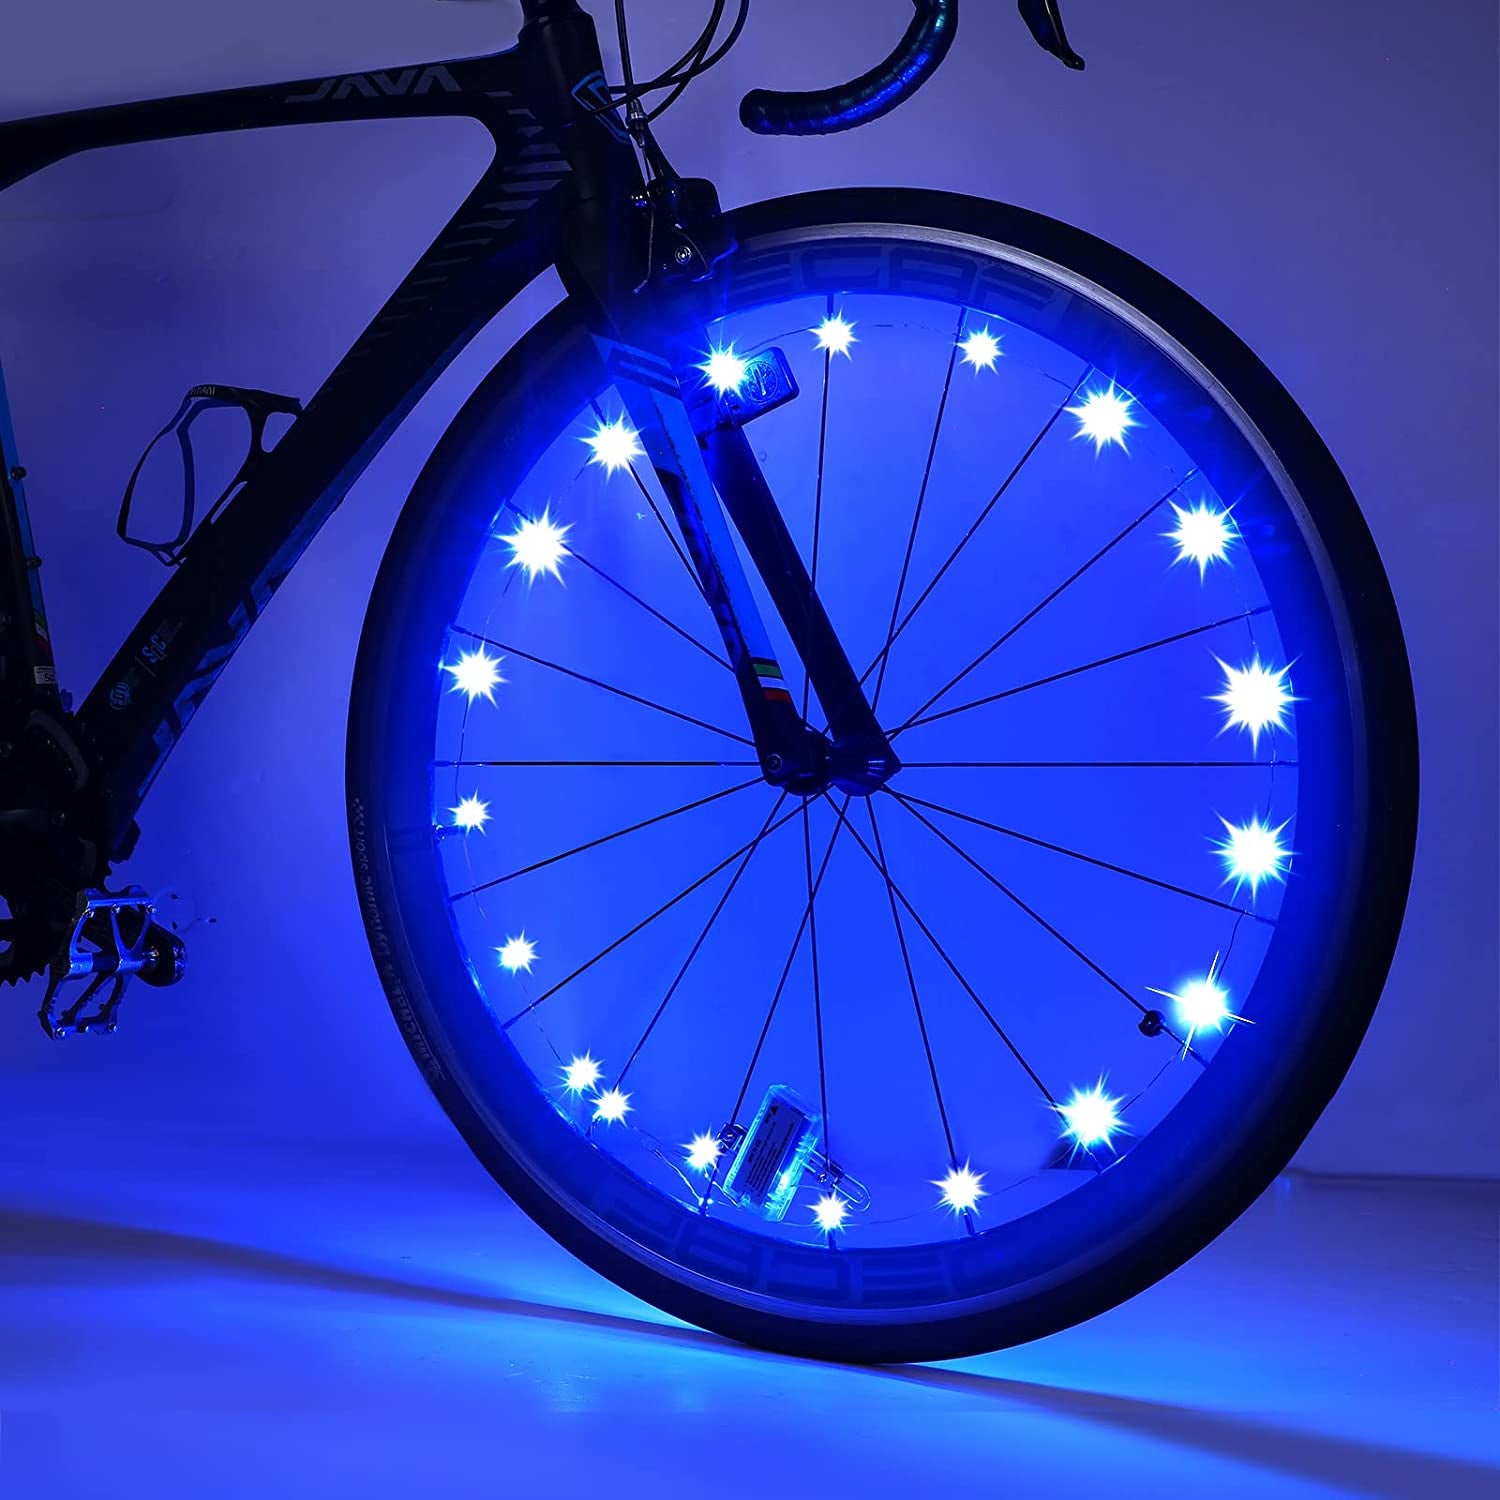  6 Pcs Tire Pack LED Bike Lights for Wheel Bicycle Spoke Lights Bright Blue Waterproof Bike Lights for Night Riding